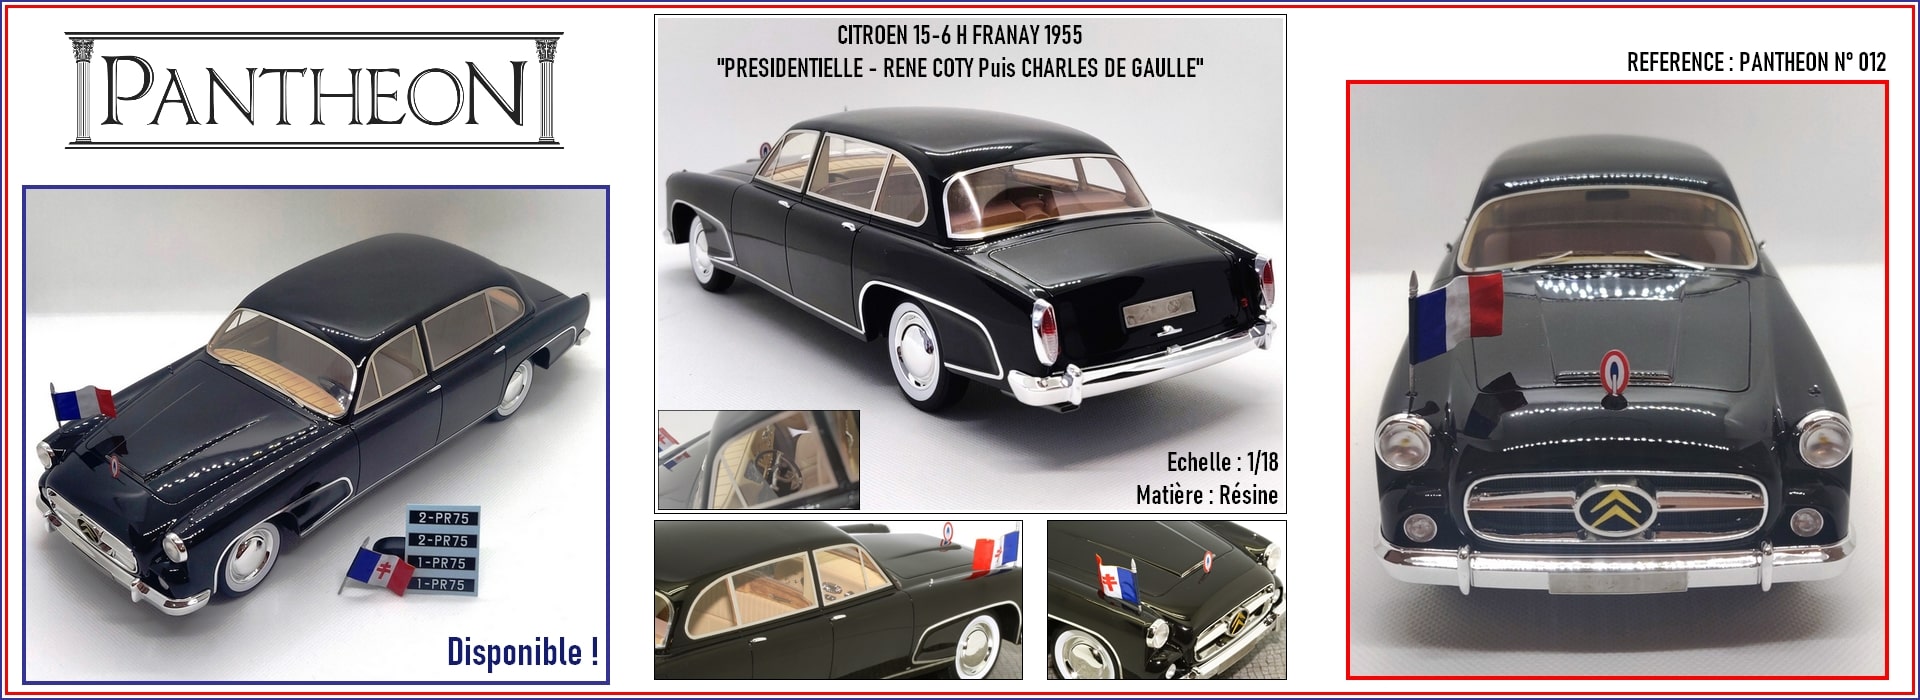 CITROEN 15-6 H FRANAY 1955 "PRESIDENTIELLE - RENE COTY PUIS CHARLES DE GAULLE"